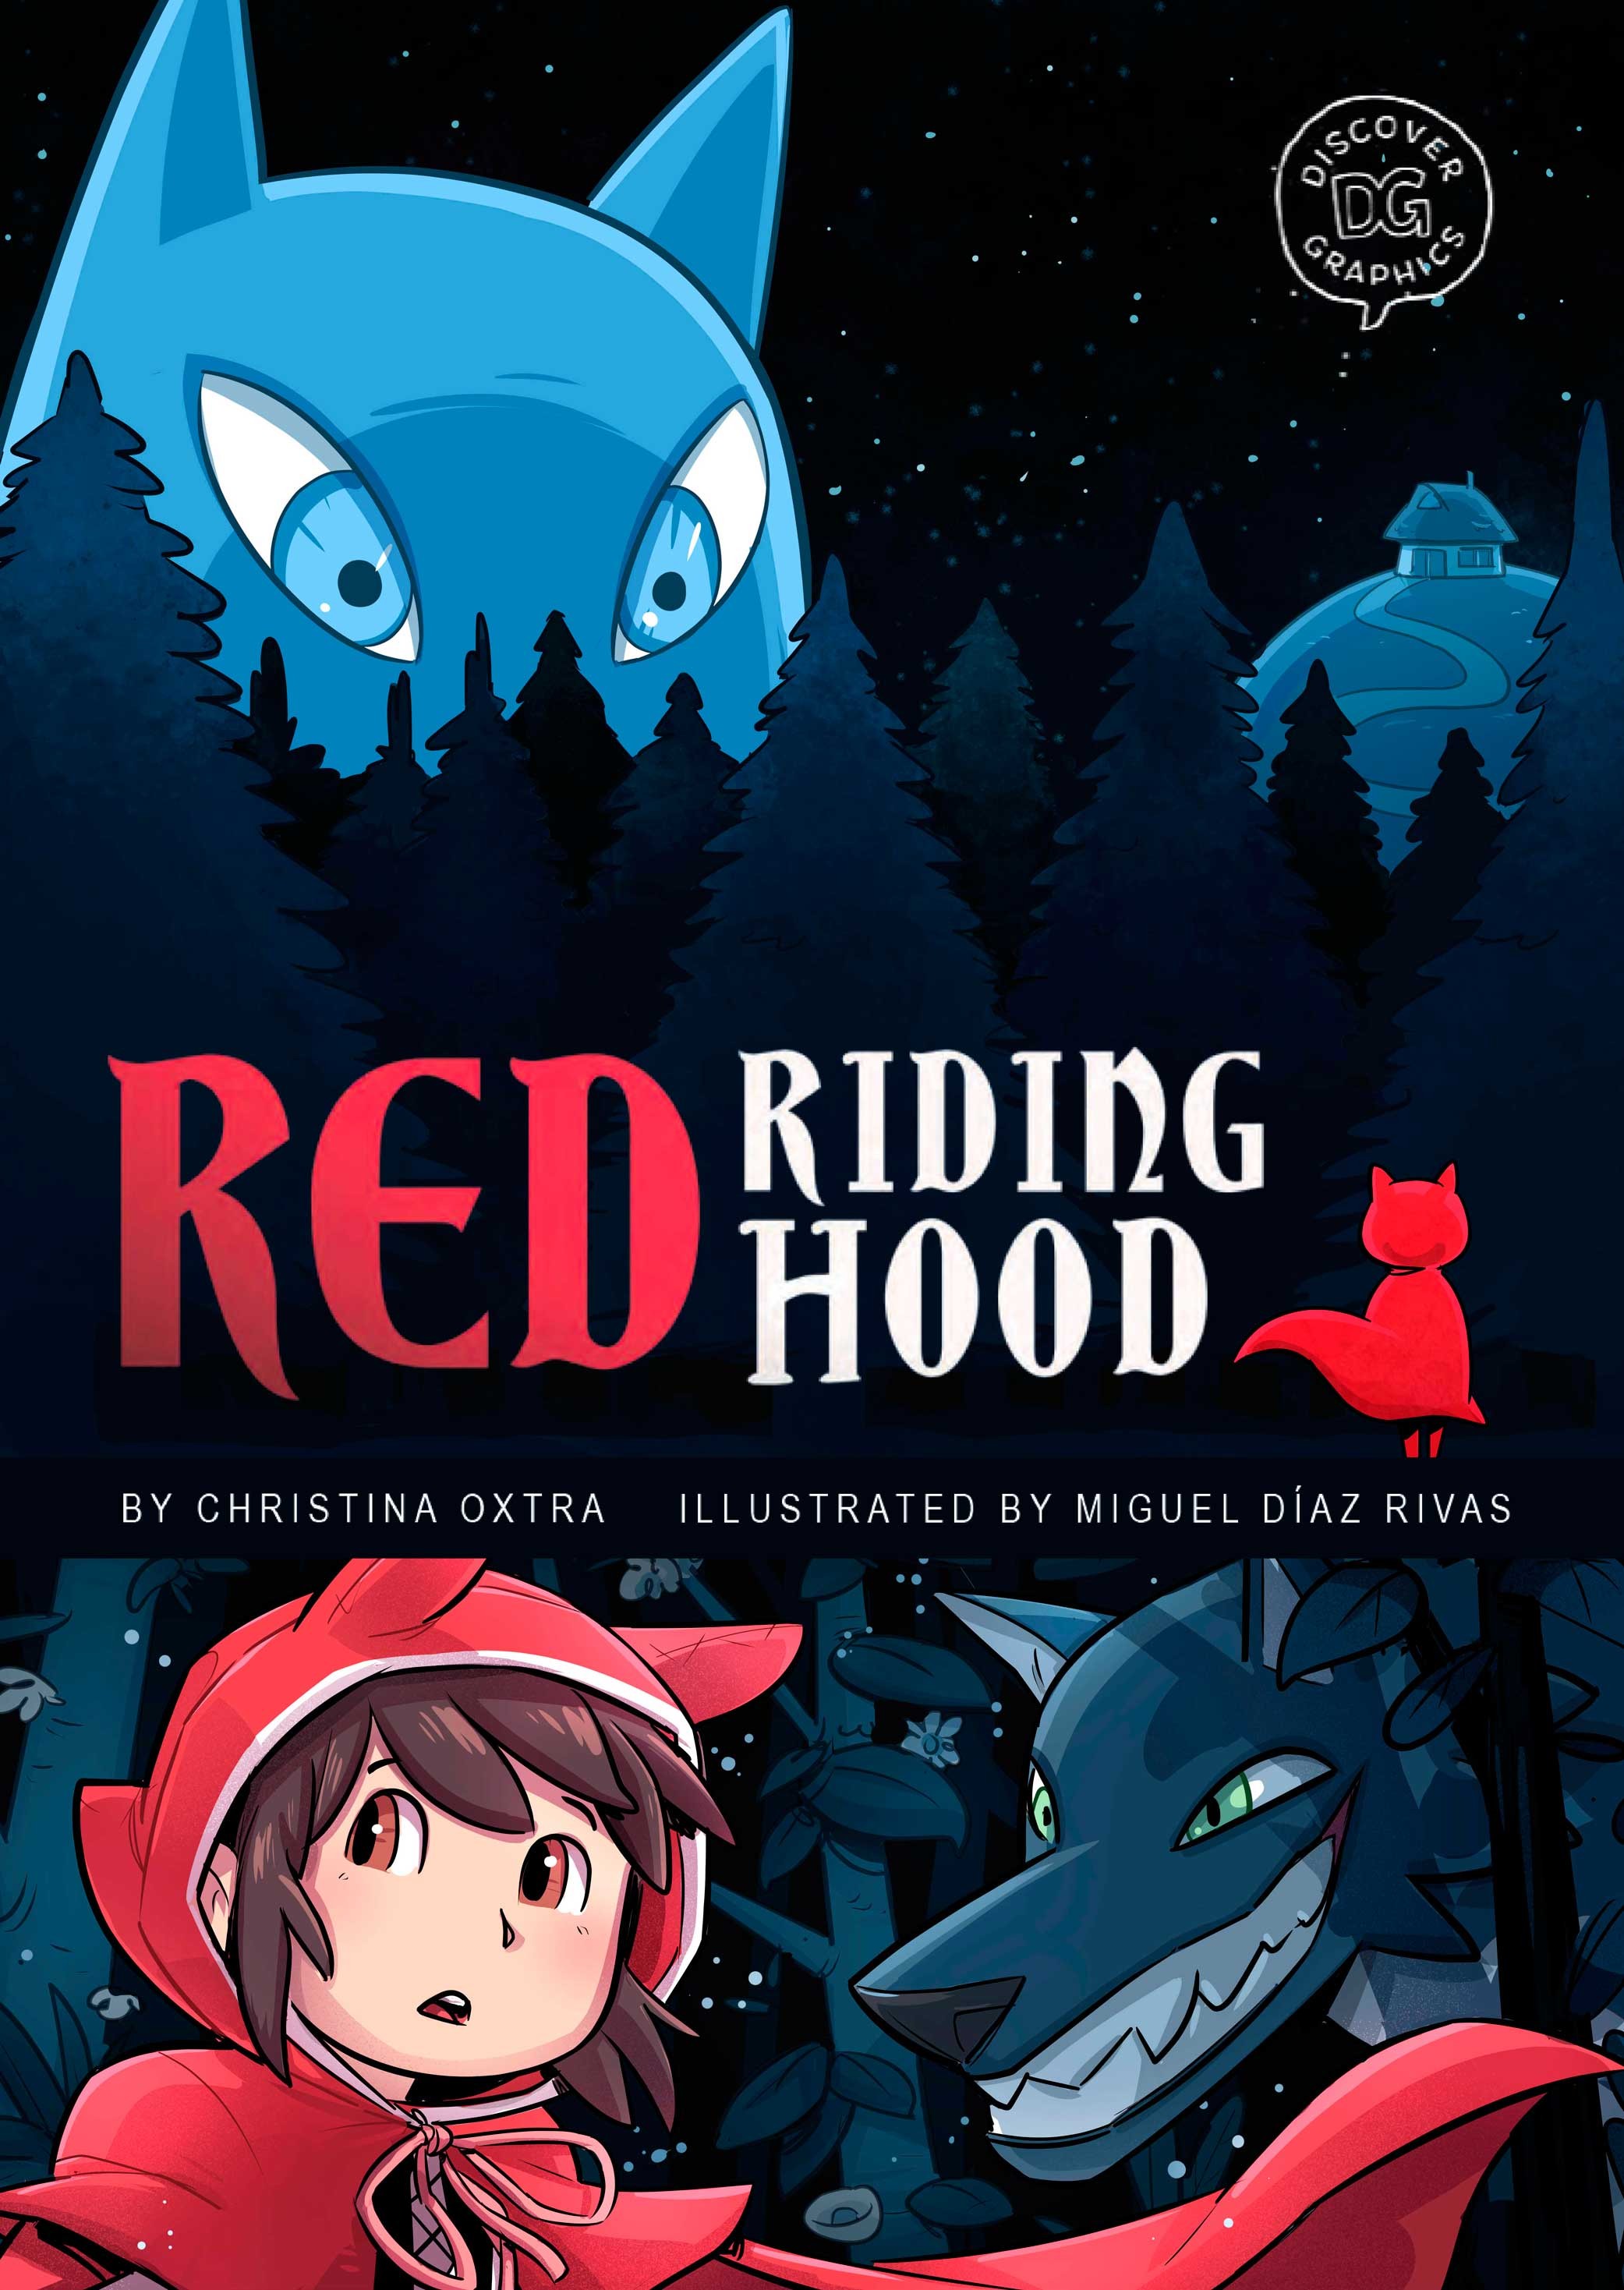 Red-Ridding-Hodd-Capstone-.portada